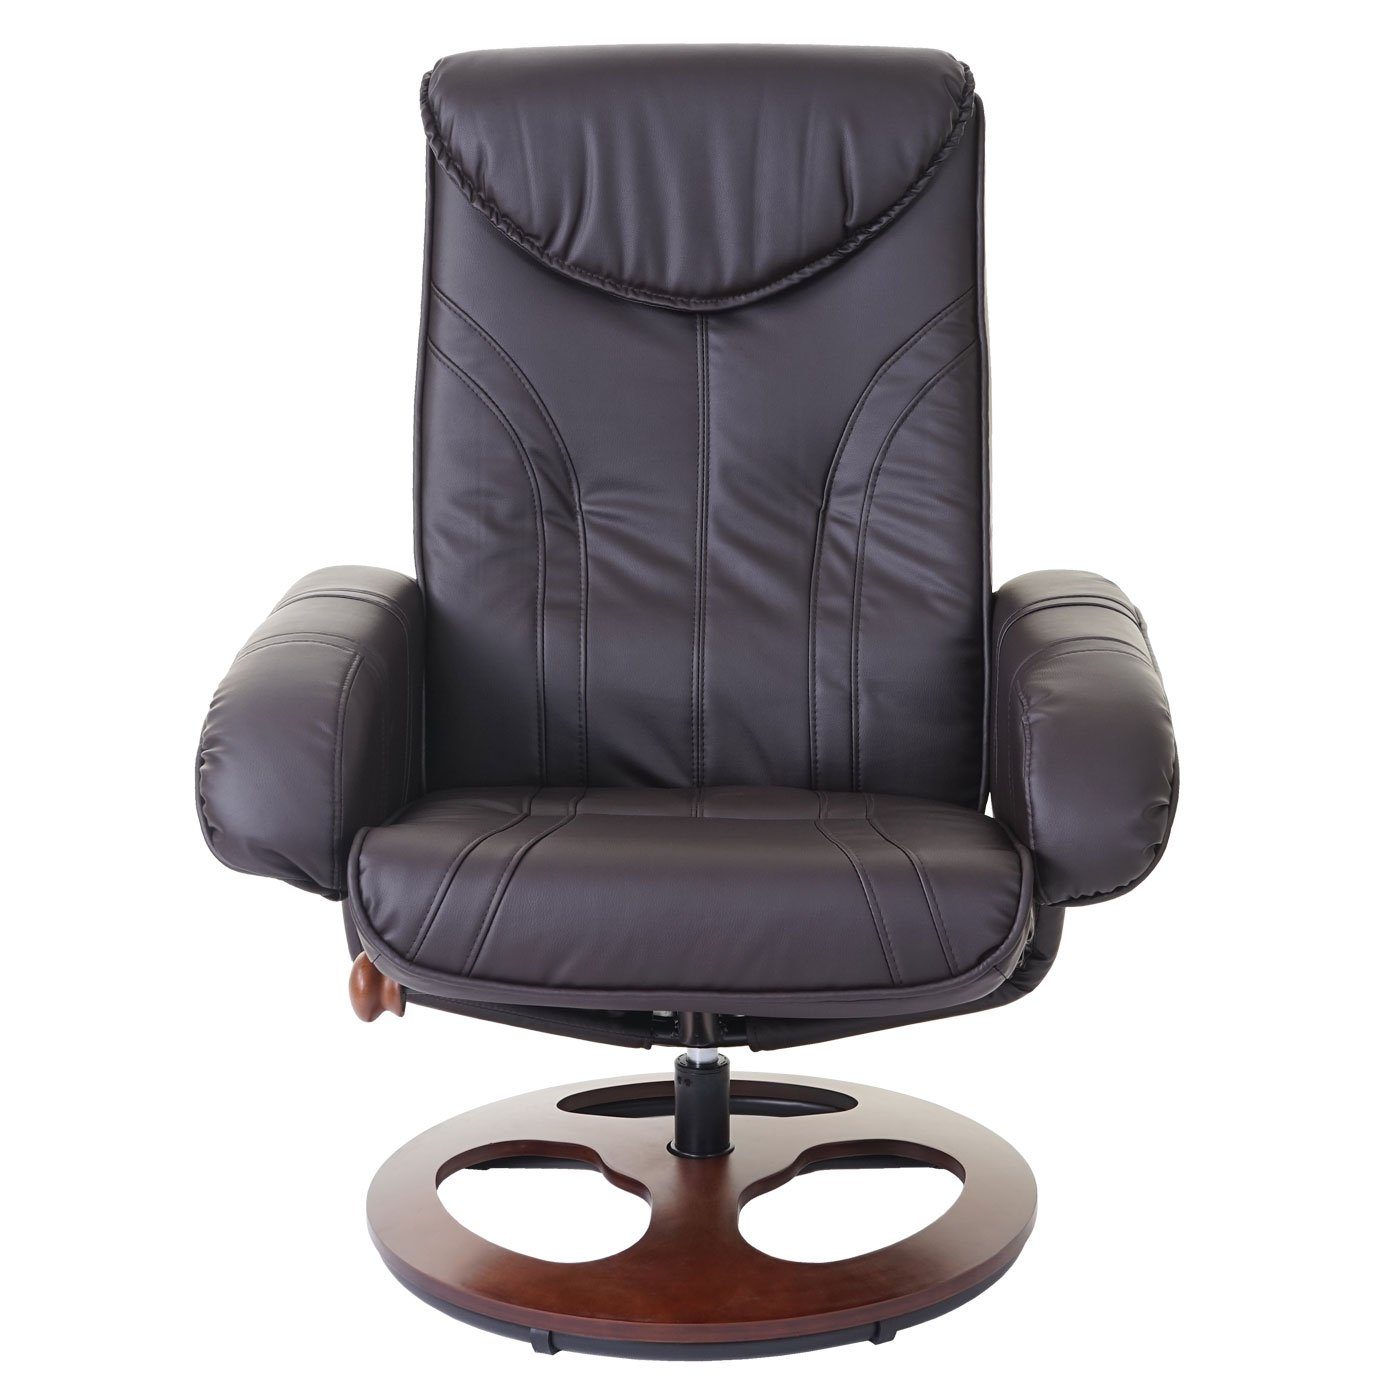 braun 360° neigbar, MCW-C46, MCW feststellbar Sessel durch Um Schraubmechanismus drehbar, Relaxsessel